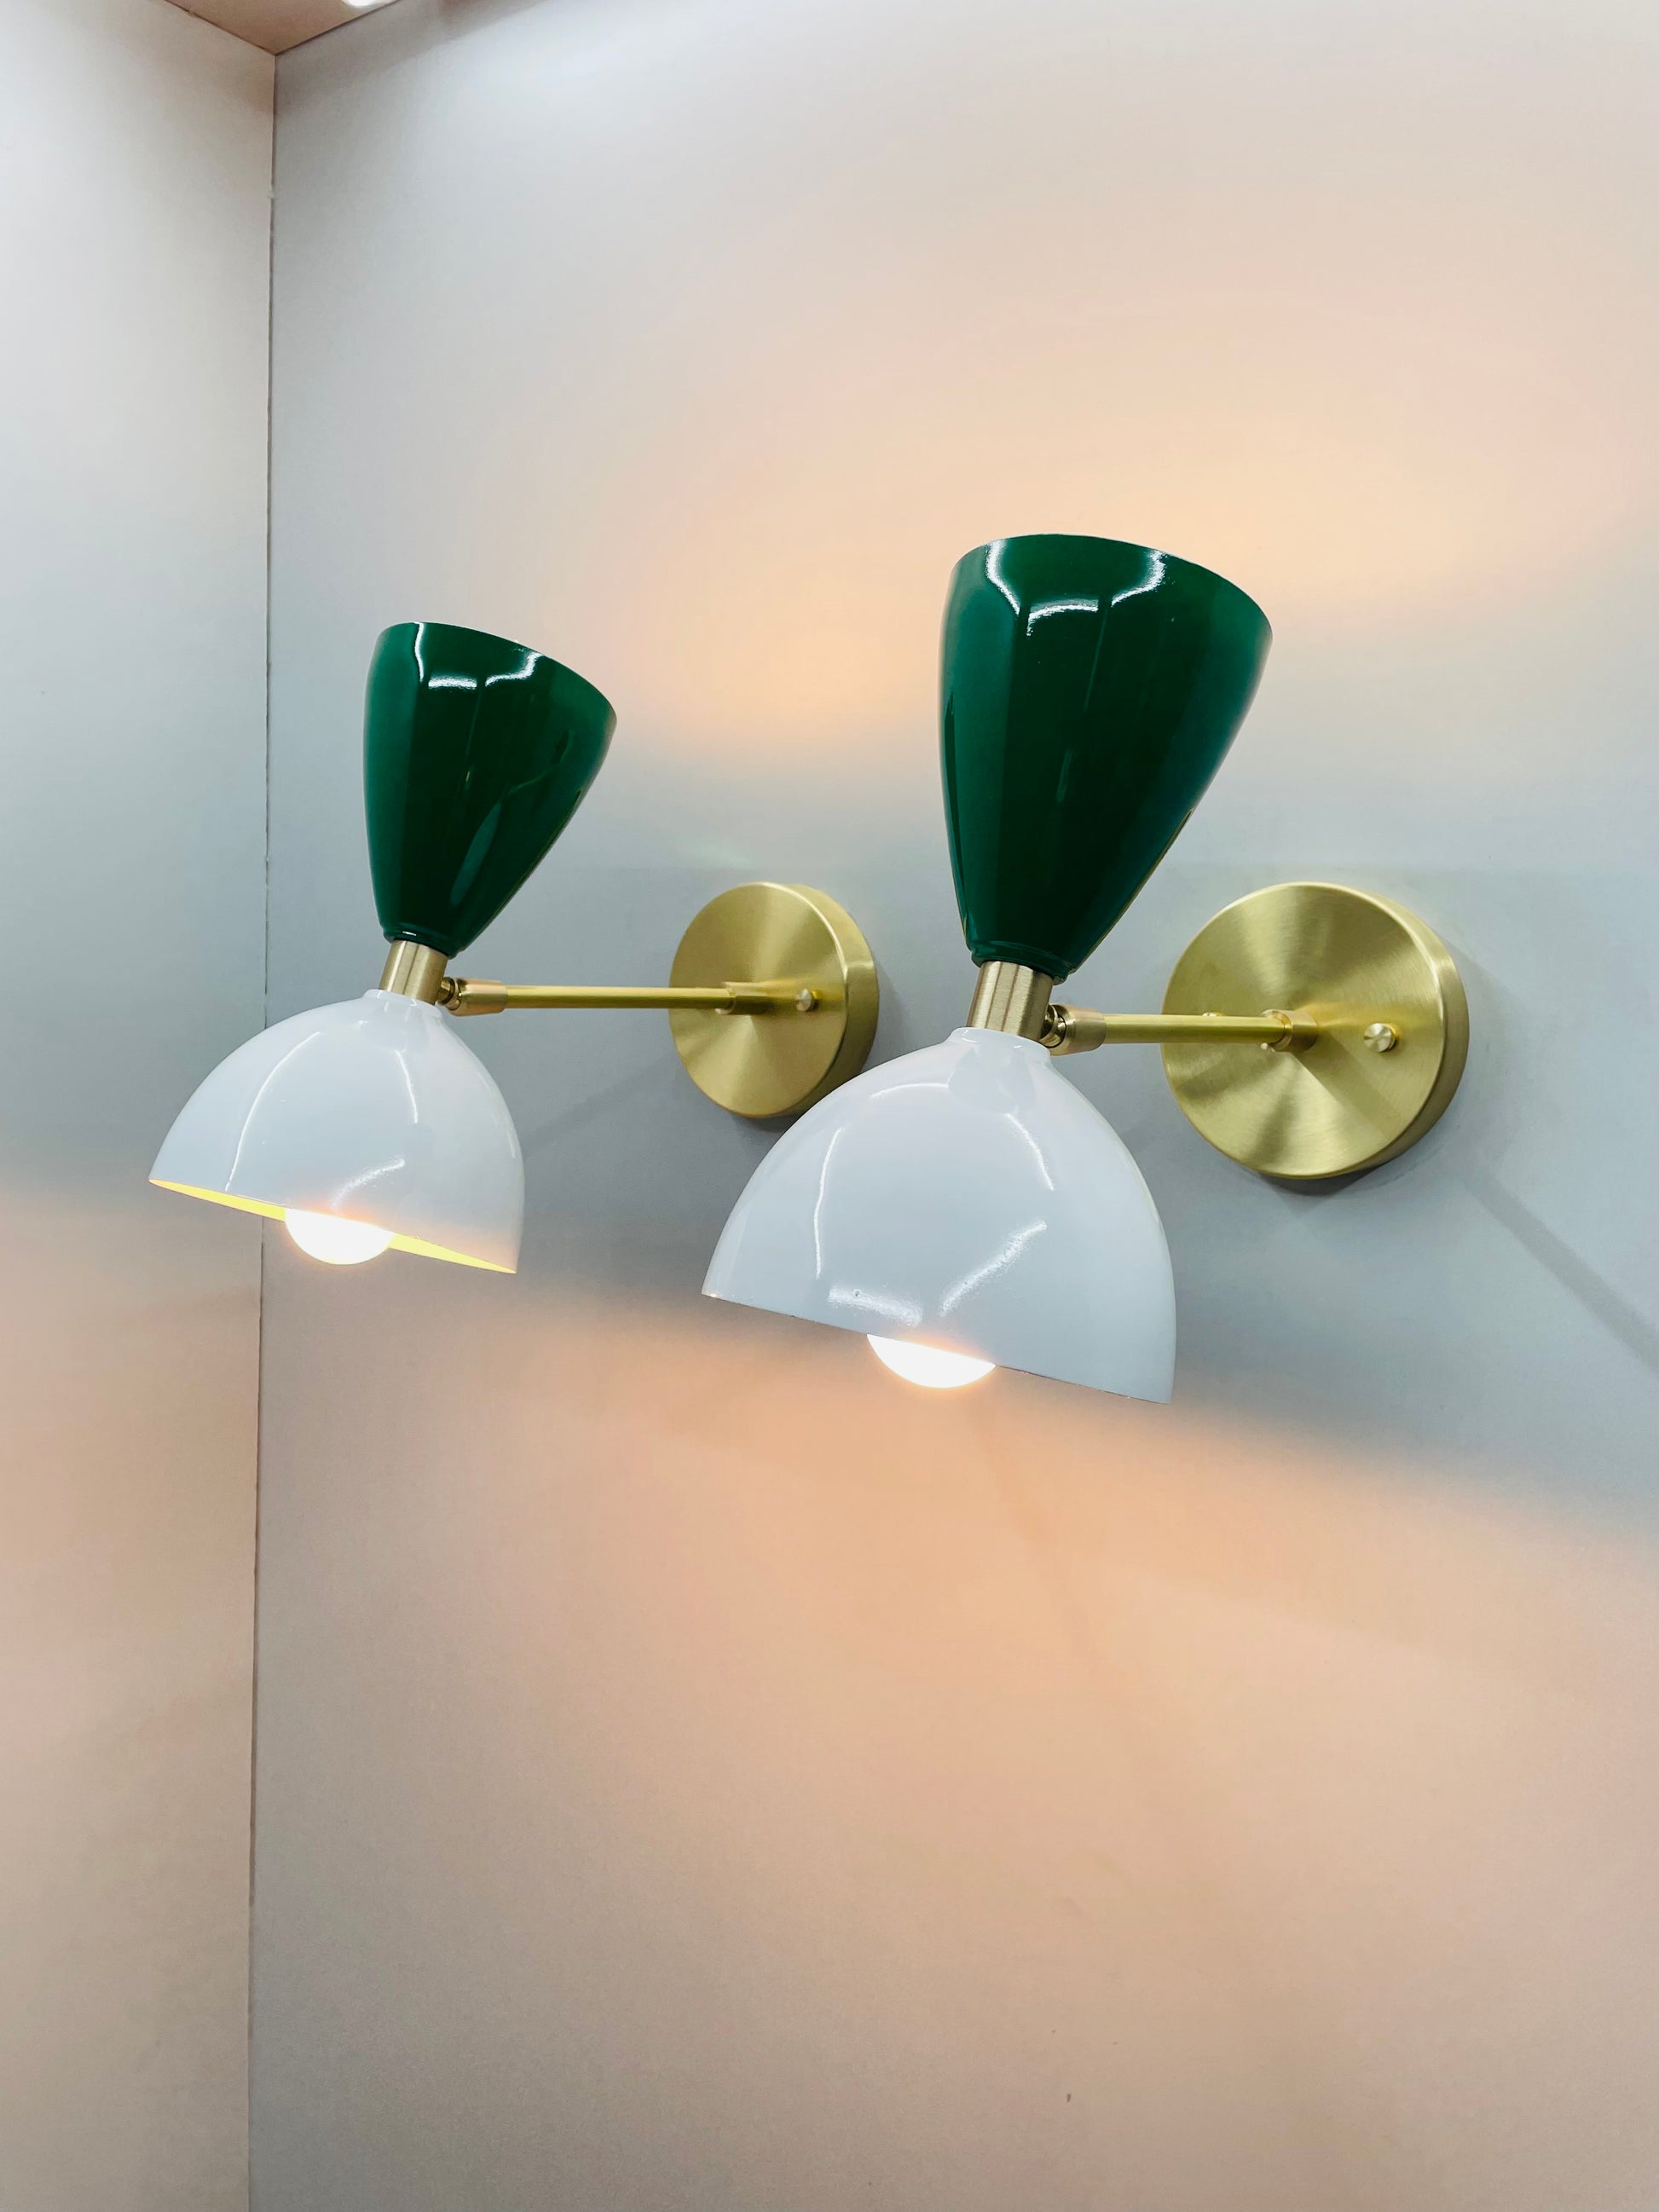 Italian Modern Stilnovo Style Wall Sconce Set - Brass Green and White Wall Light Lamps